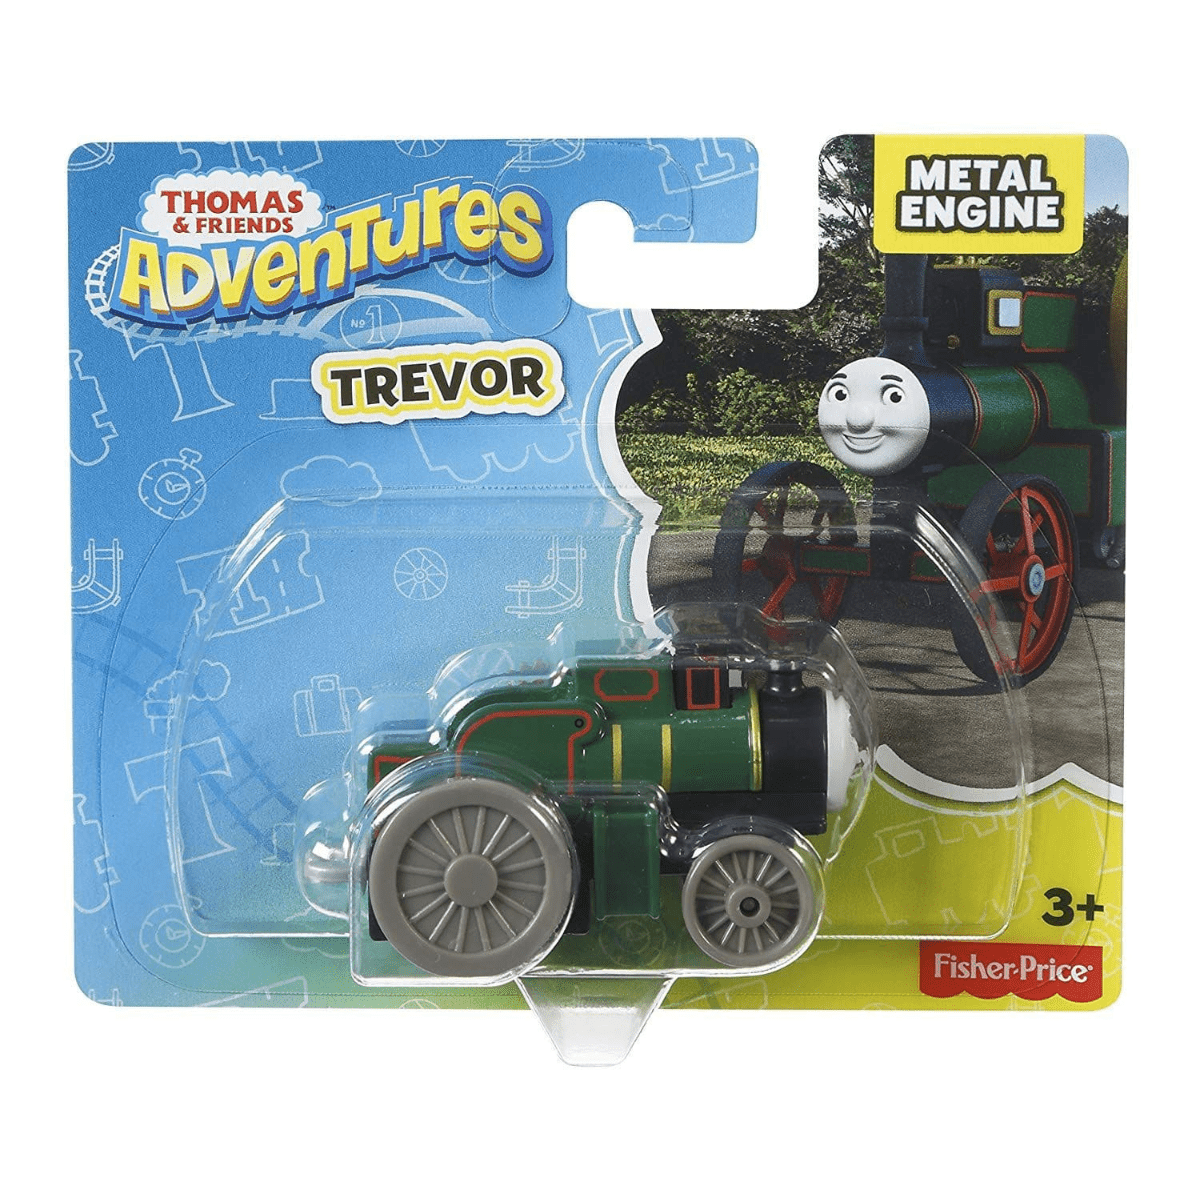 Thomas & Friends Adventures - TREVOR